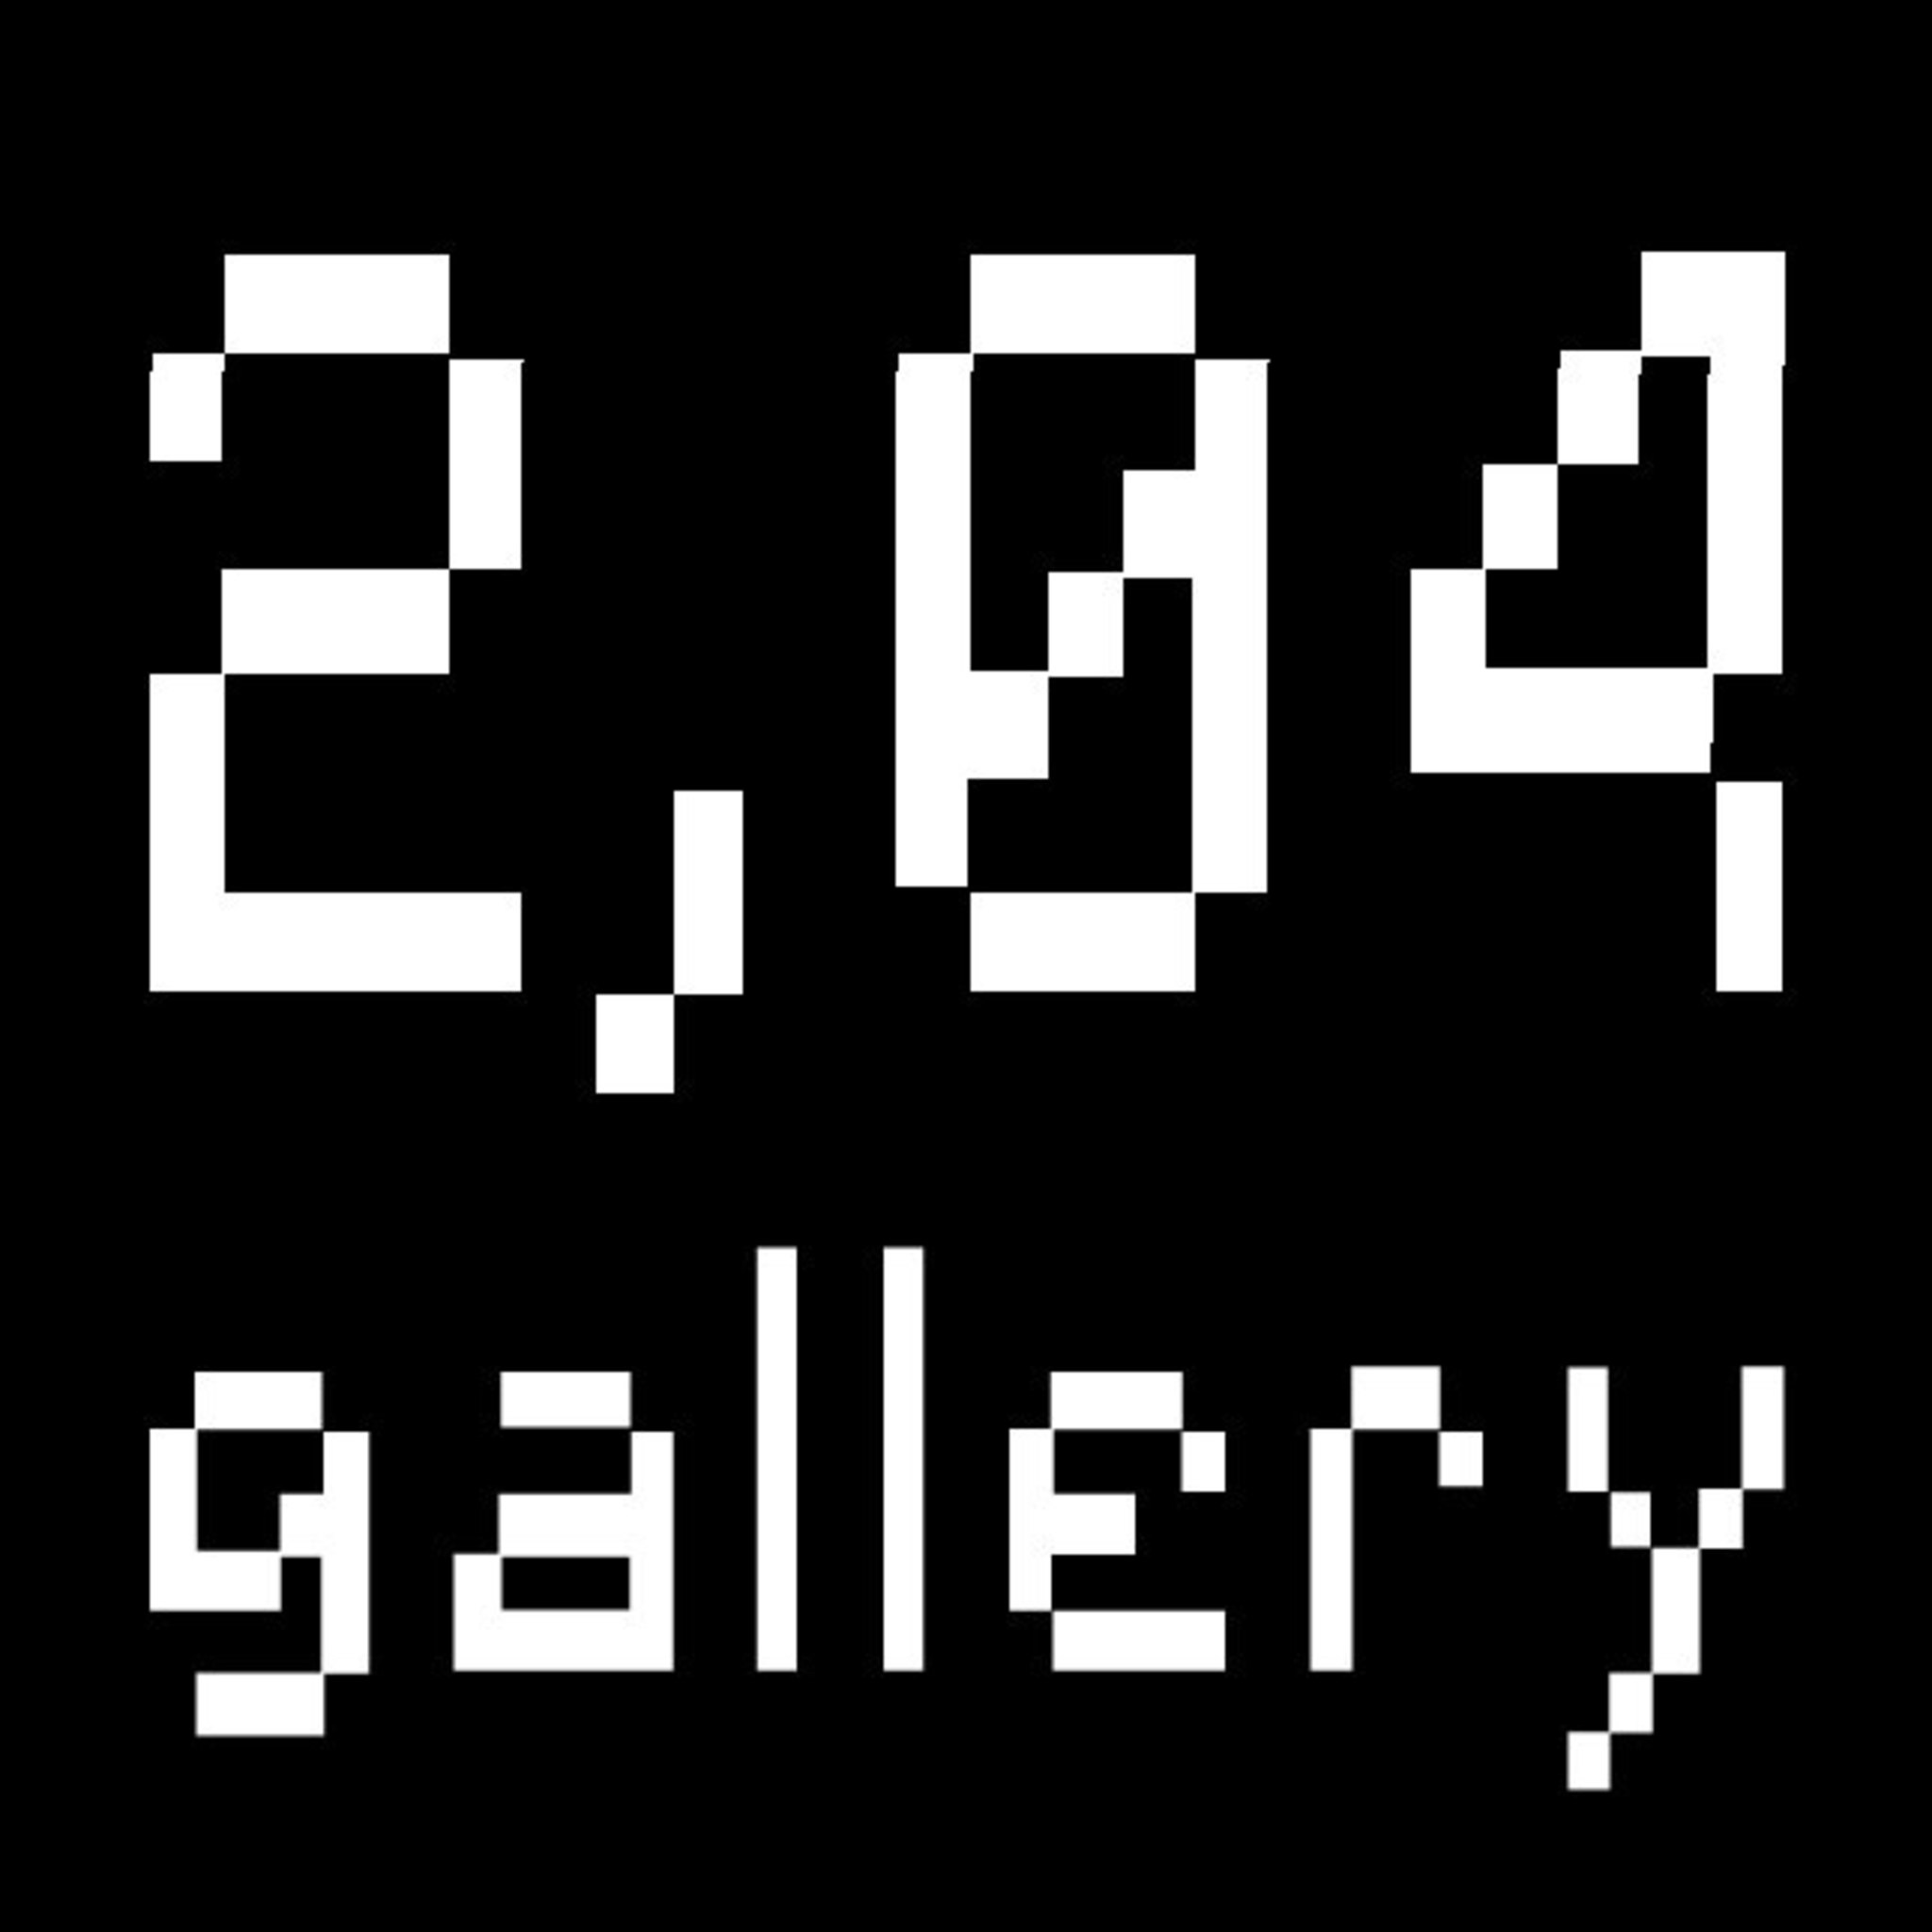 Experimental gallery 2,04